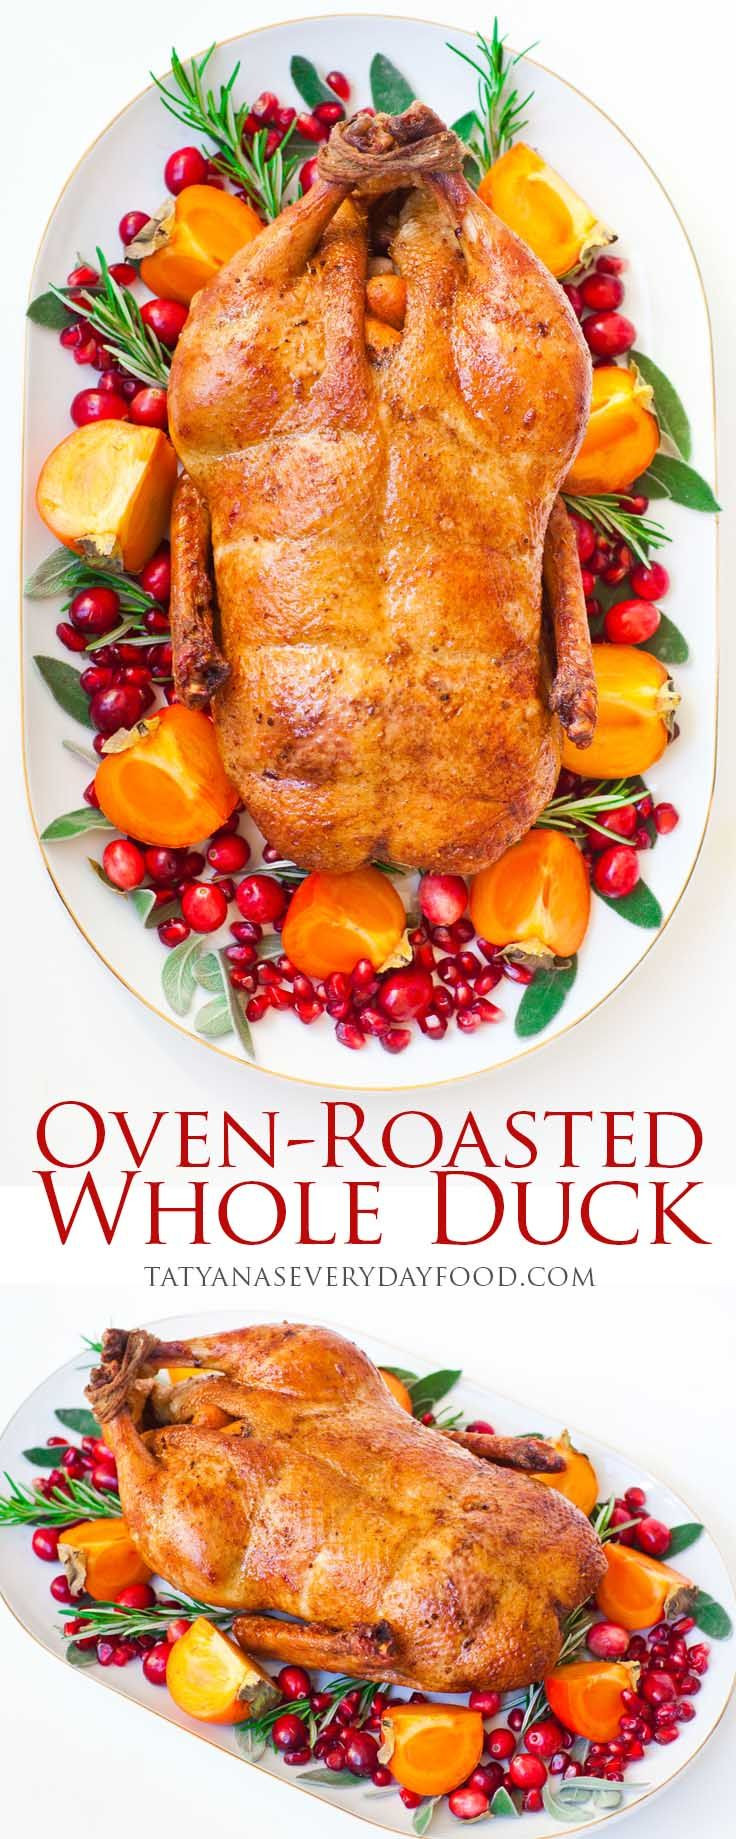 Duck Recipes For Thanksgiving
 Best 25 Roast duck ideas on Pinterest